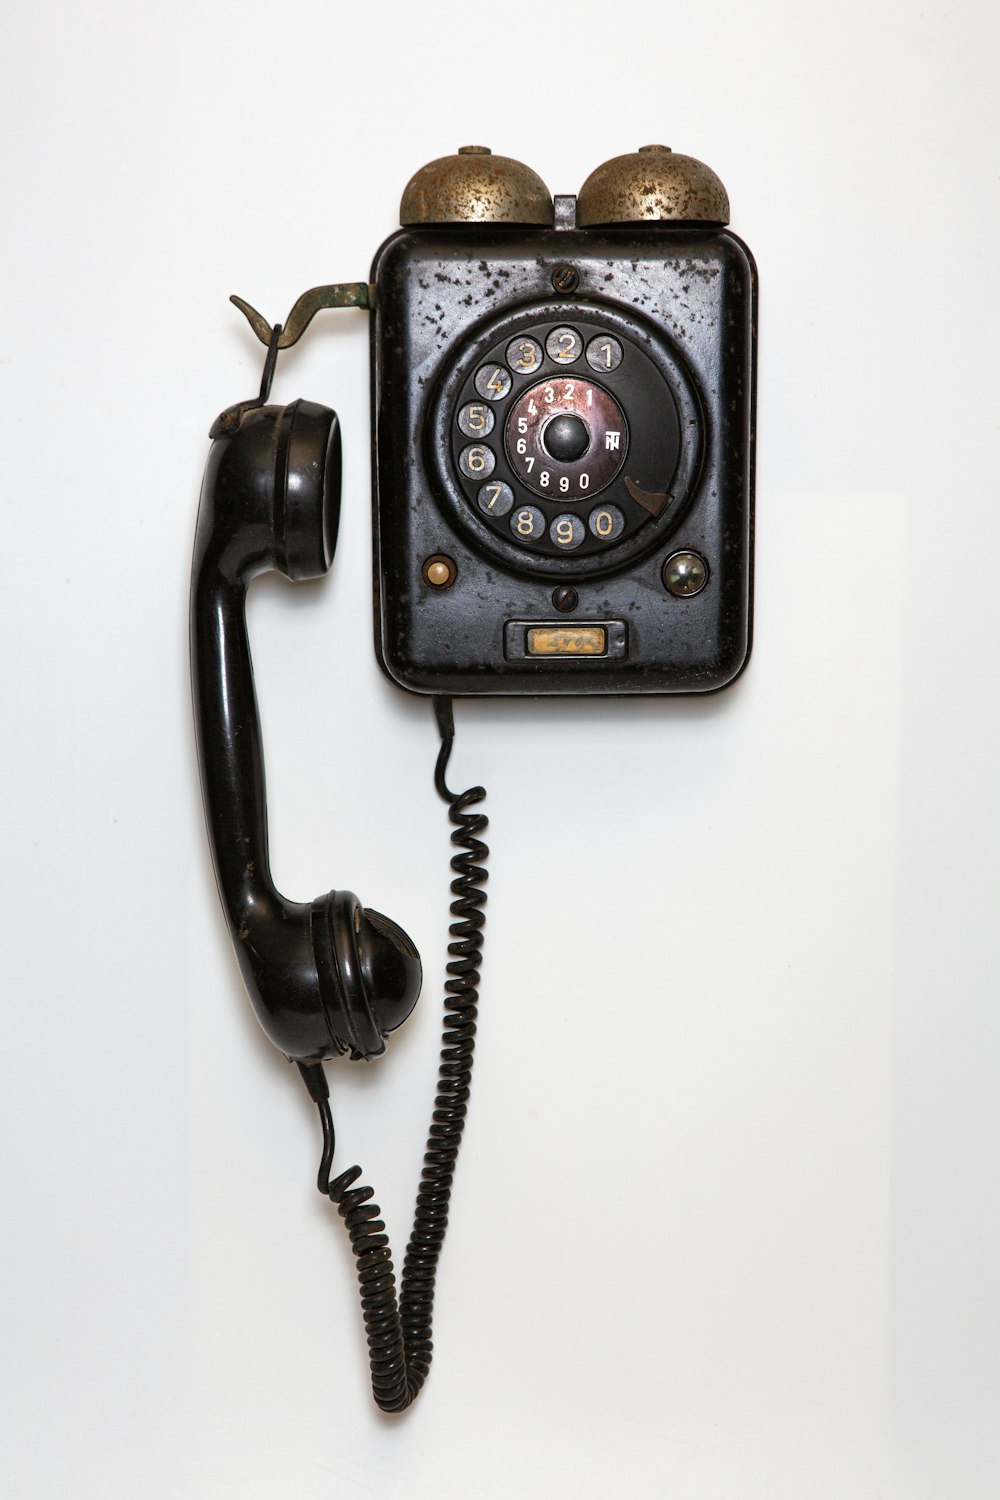 schwarz-graues schnurgebundenes Telefon